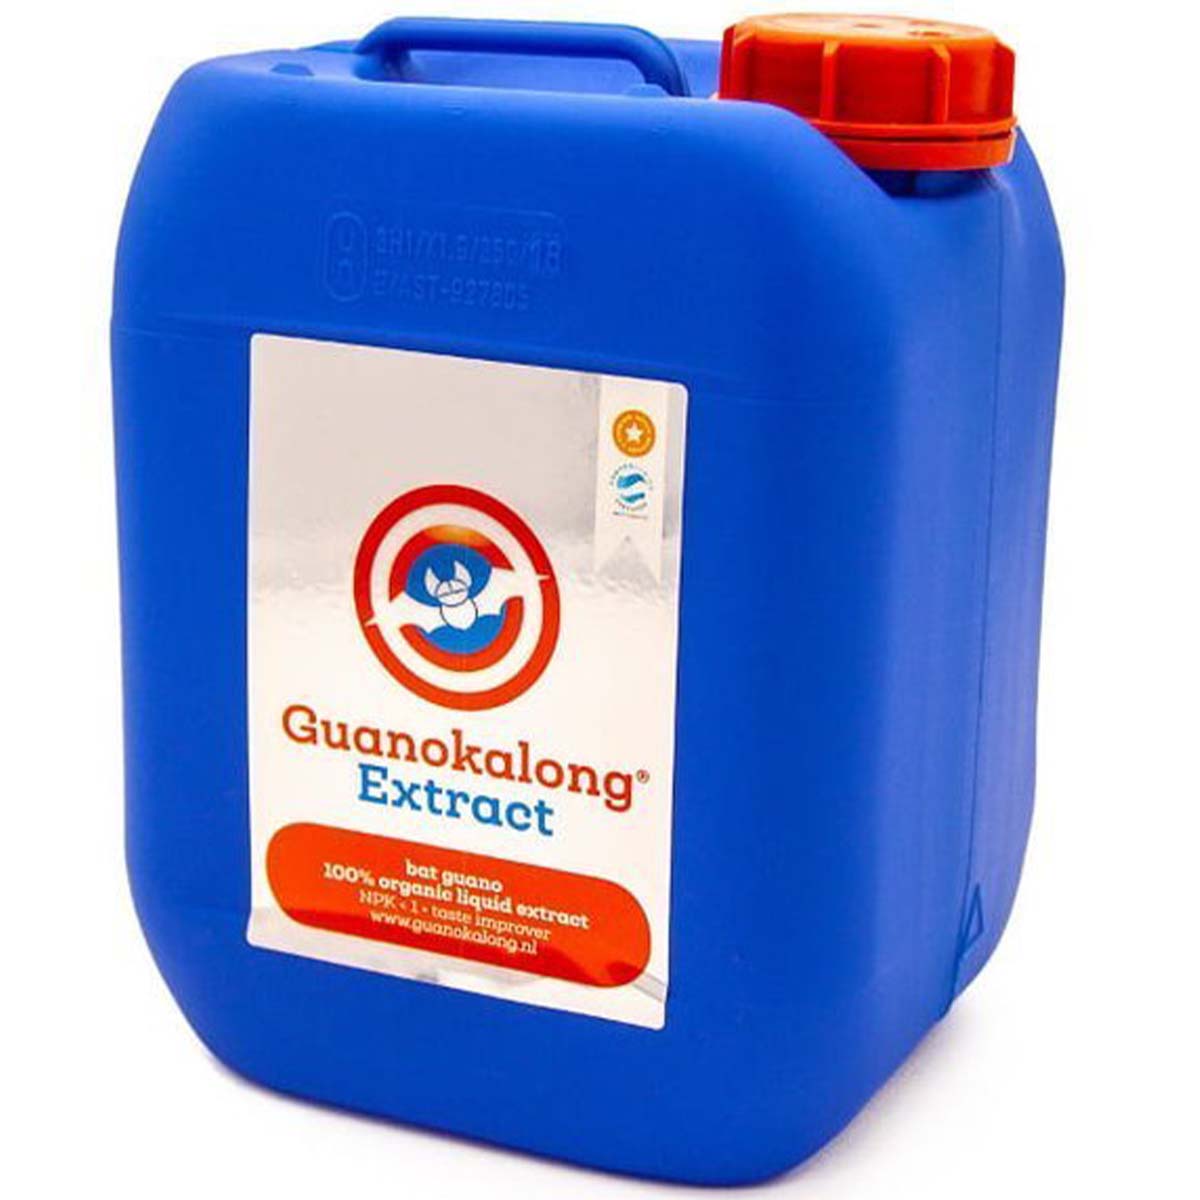 GK-Organics Guanokalong Extract